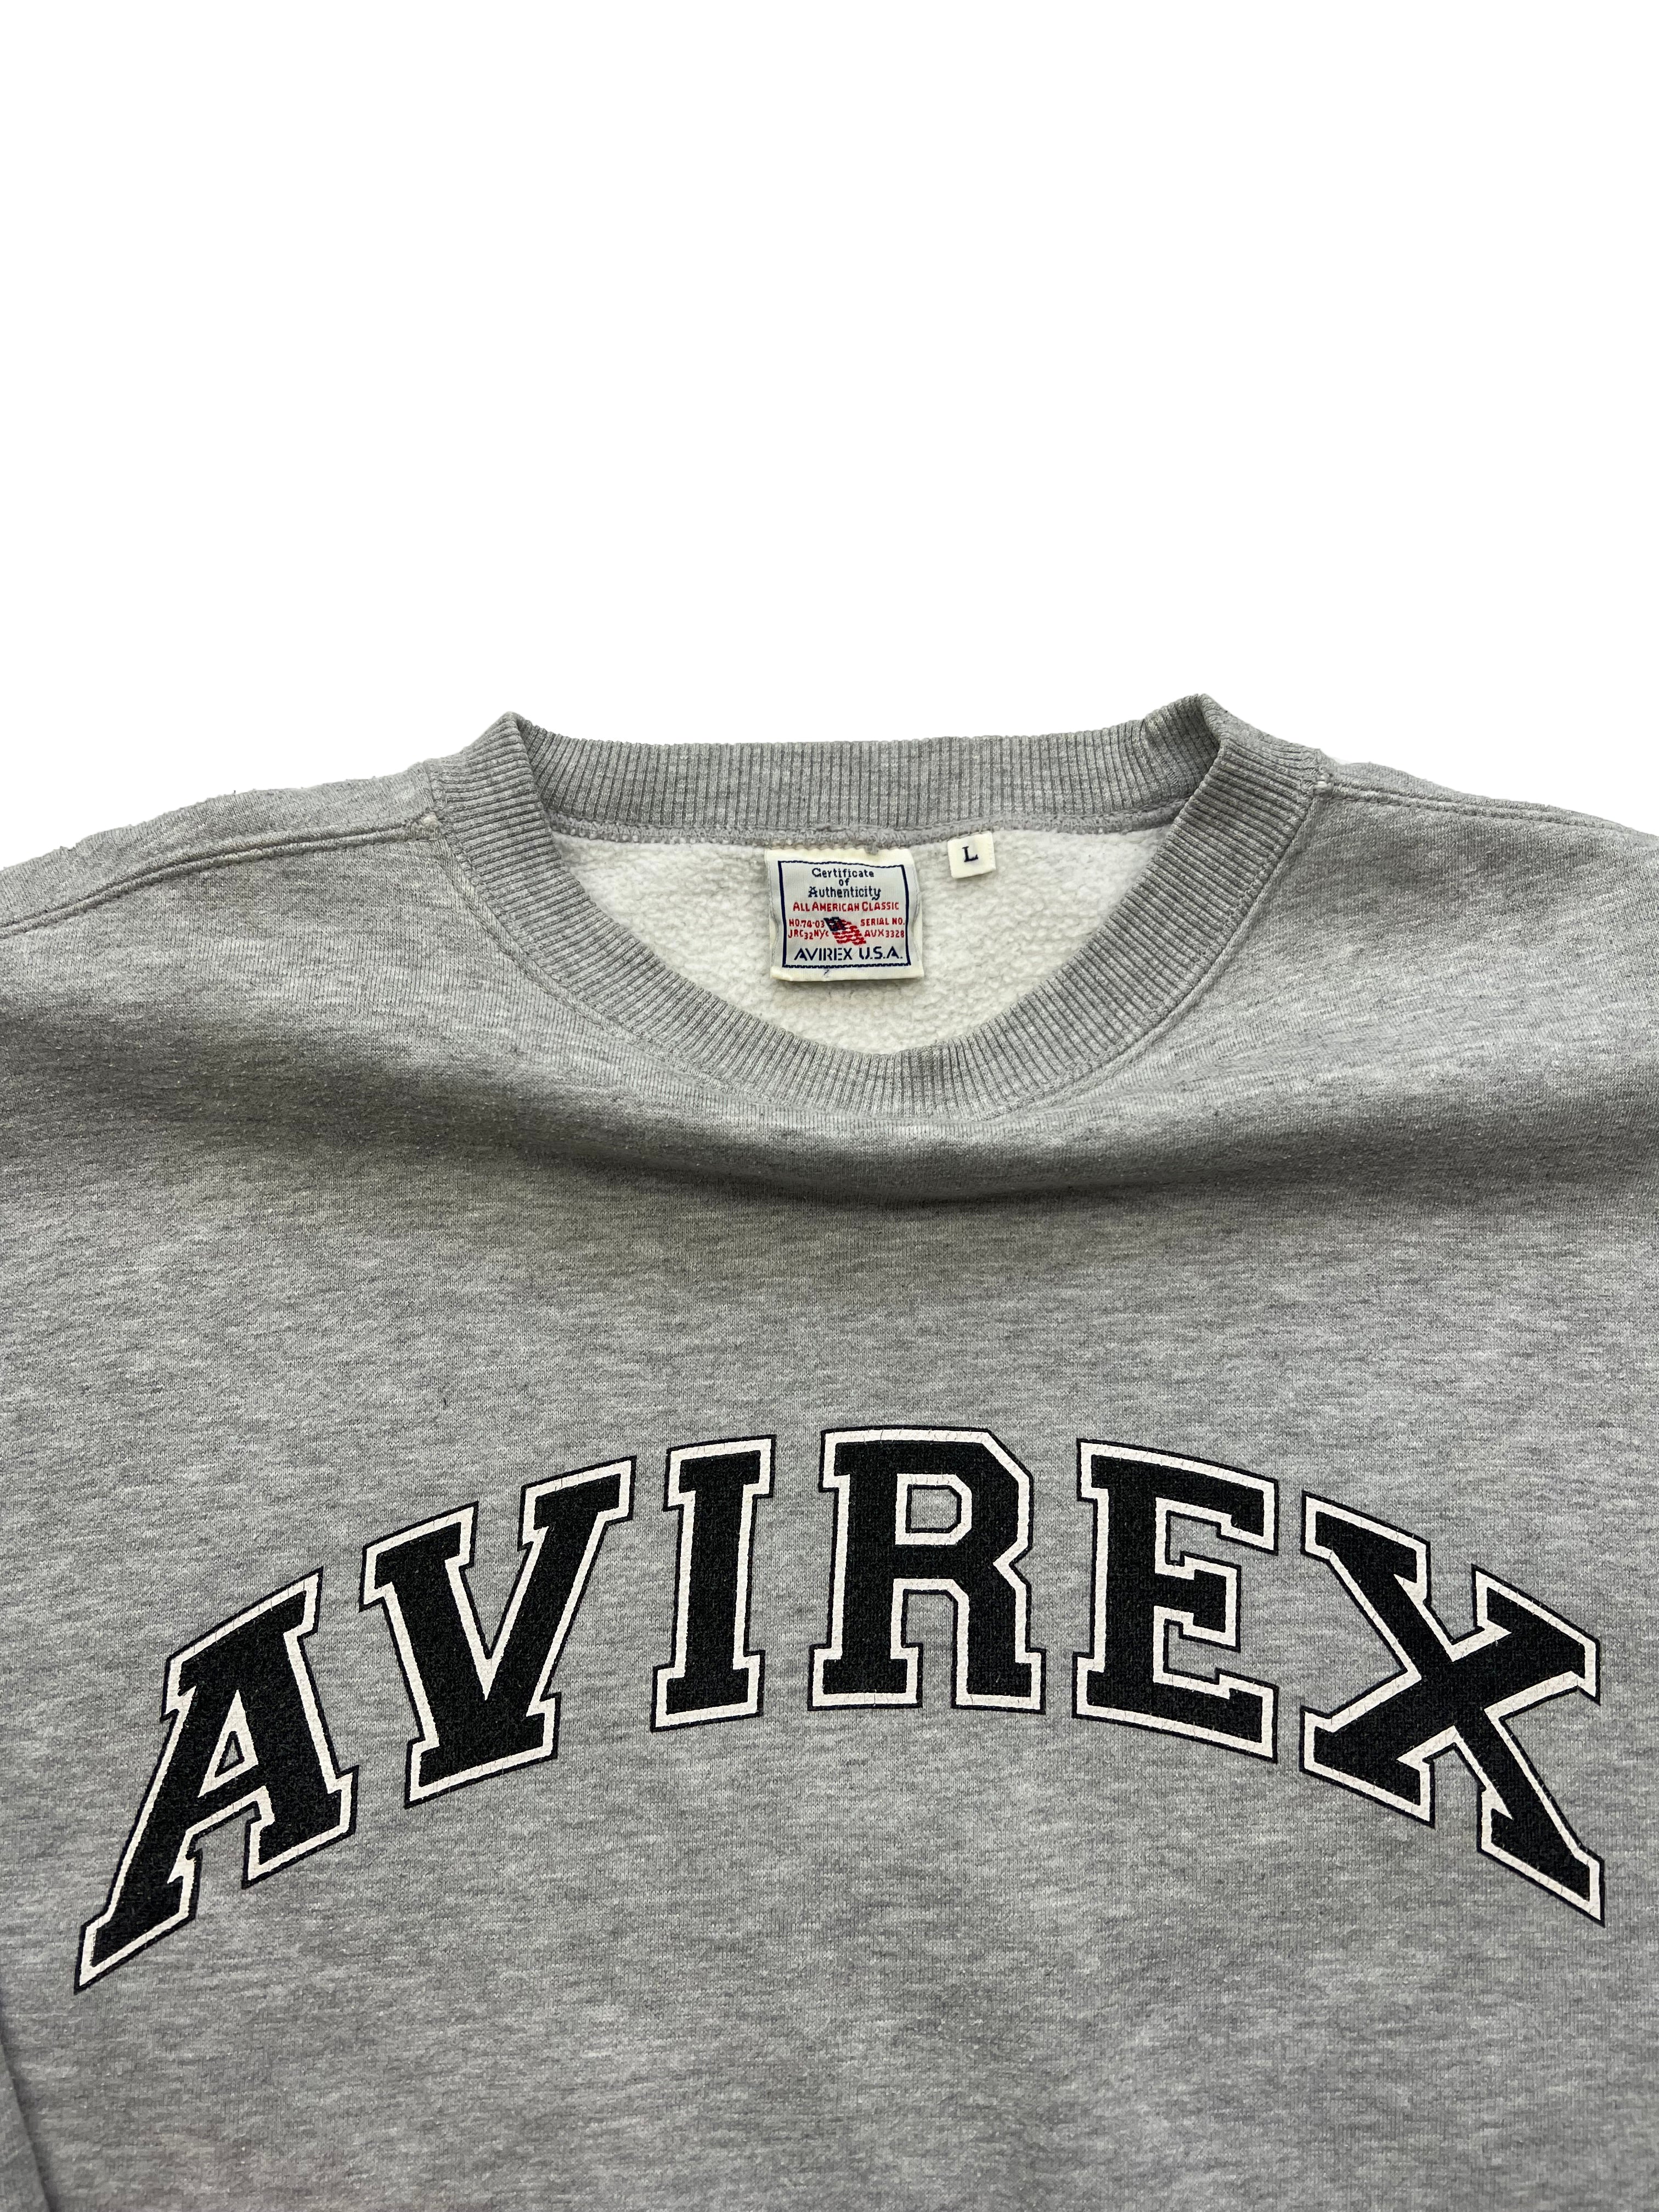 Avirex Grey Sweatshirt 00's